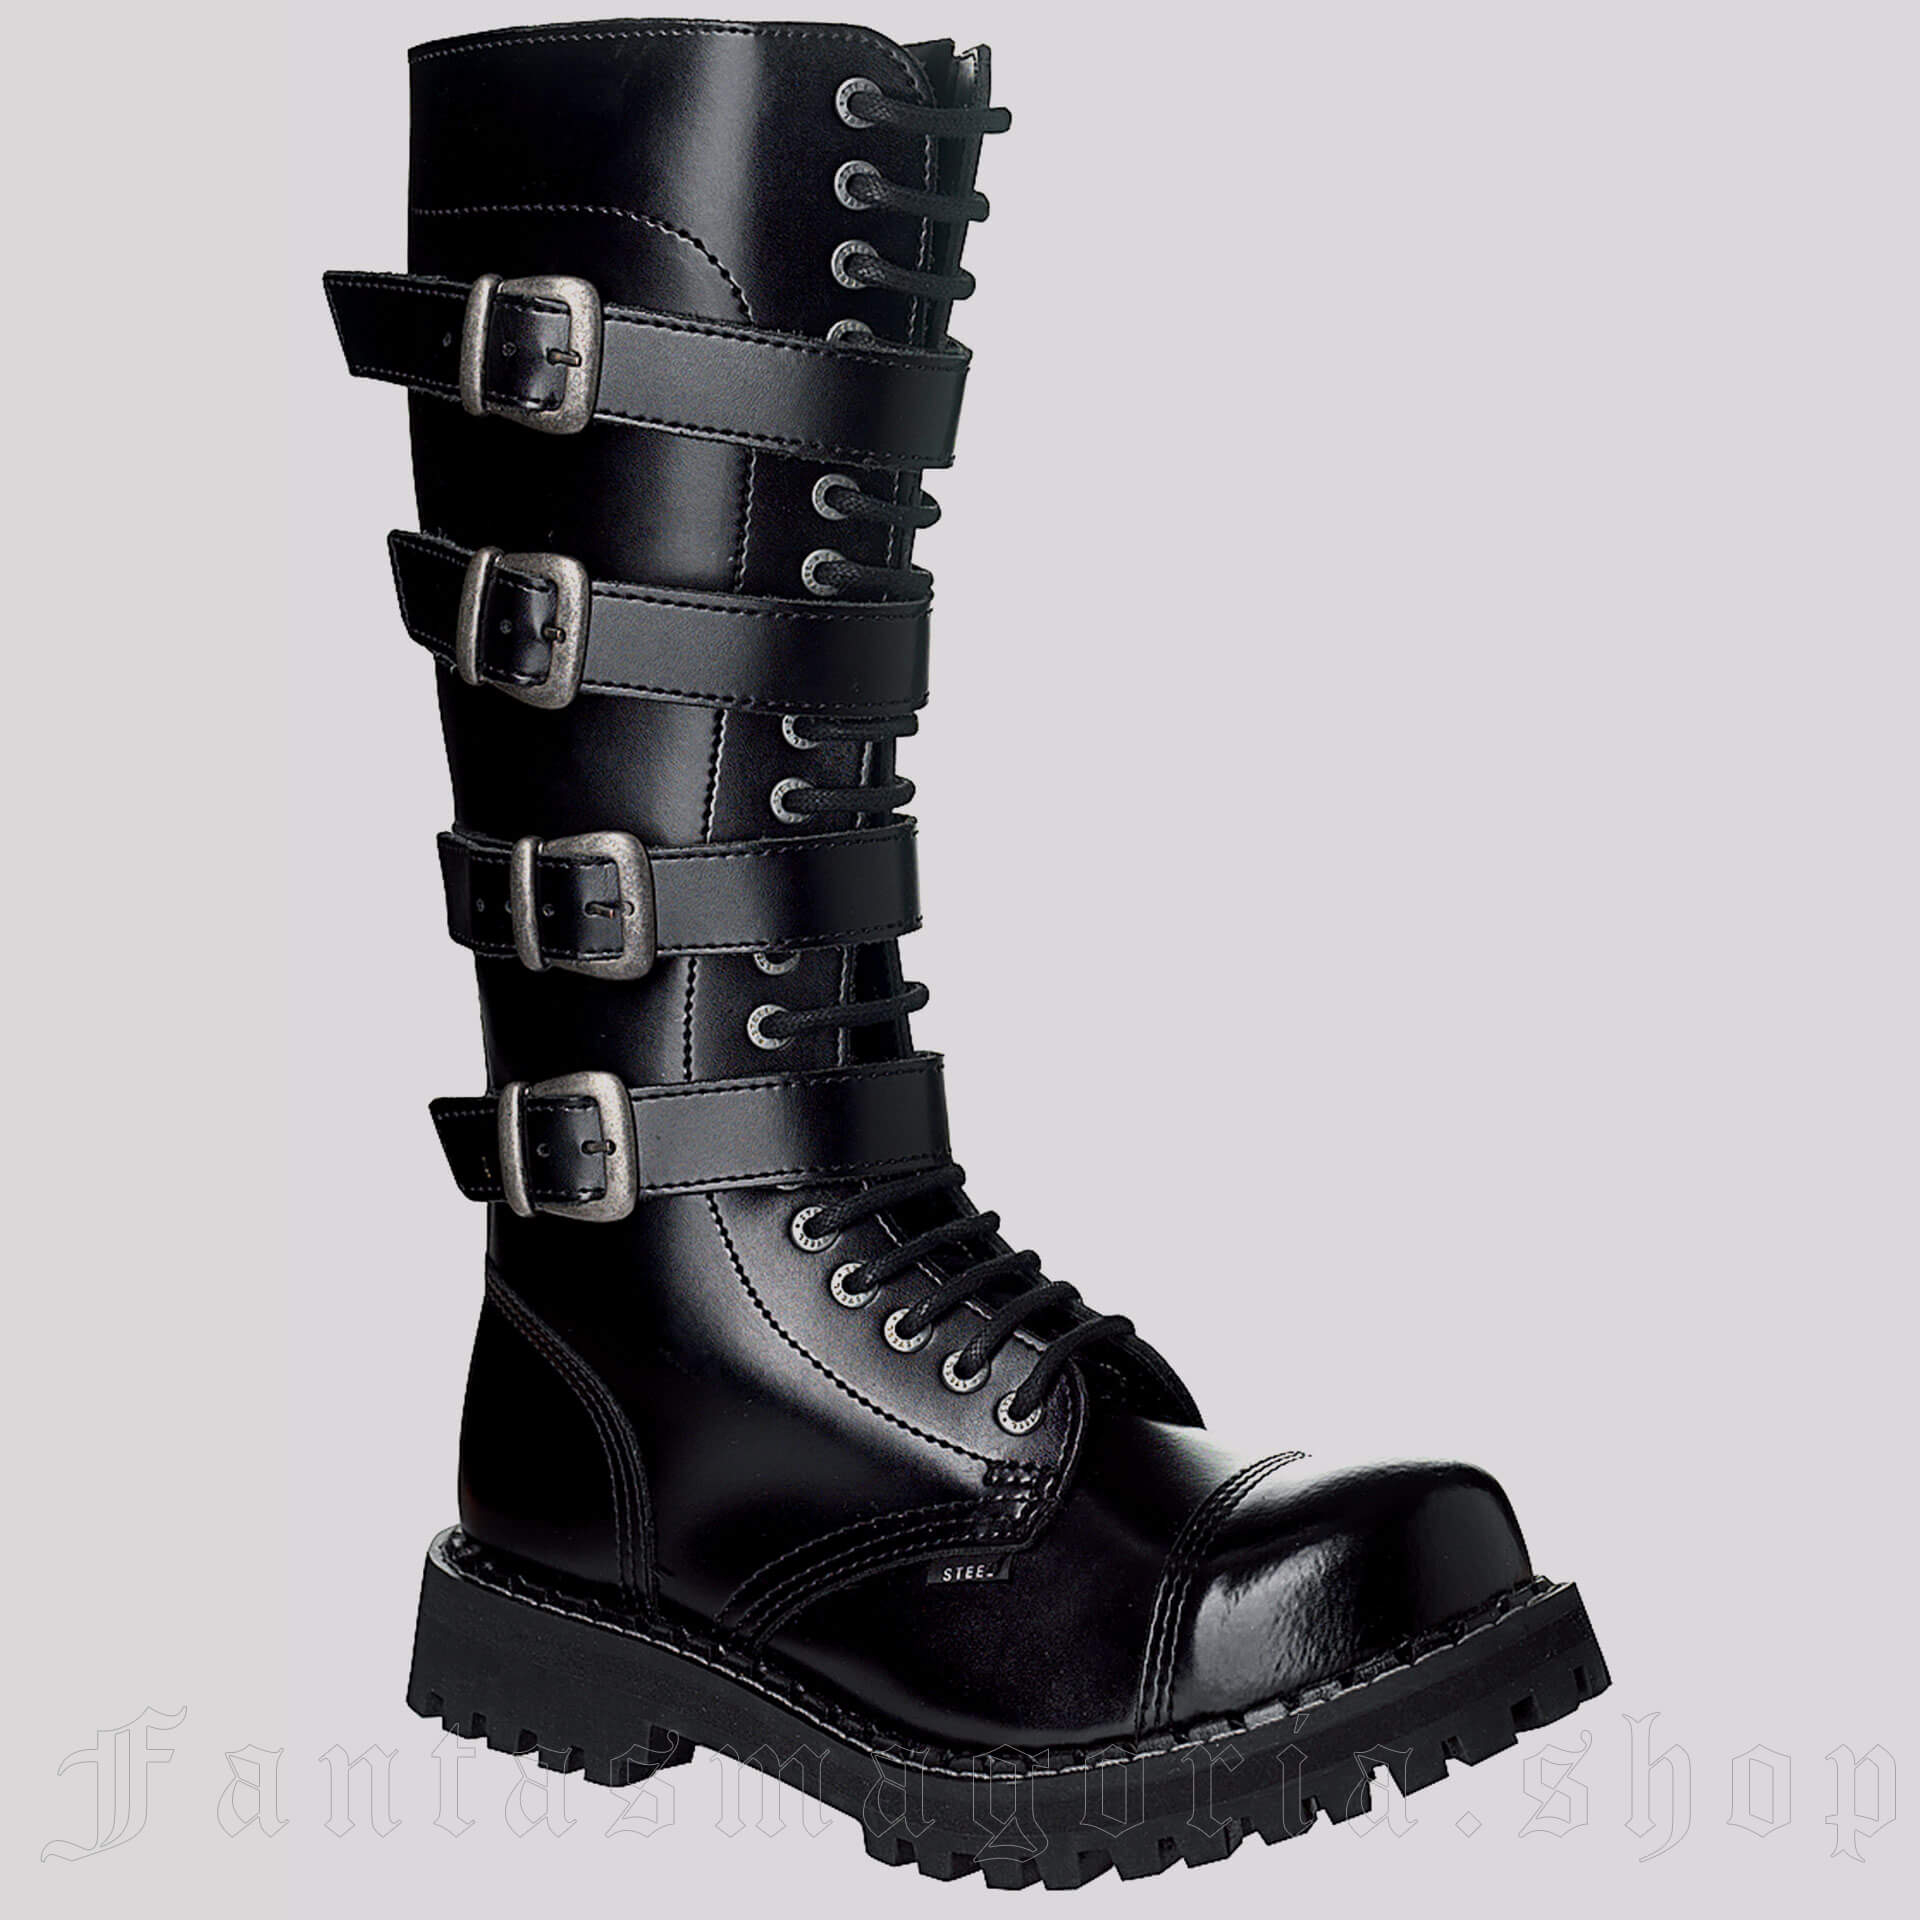 20-Eye Buckled Combat Boots with Zipper Steel 20EYE-BLACK-WITH-BUCKLES-STEEL 1